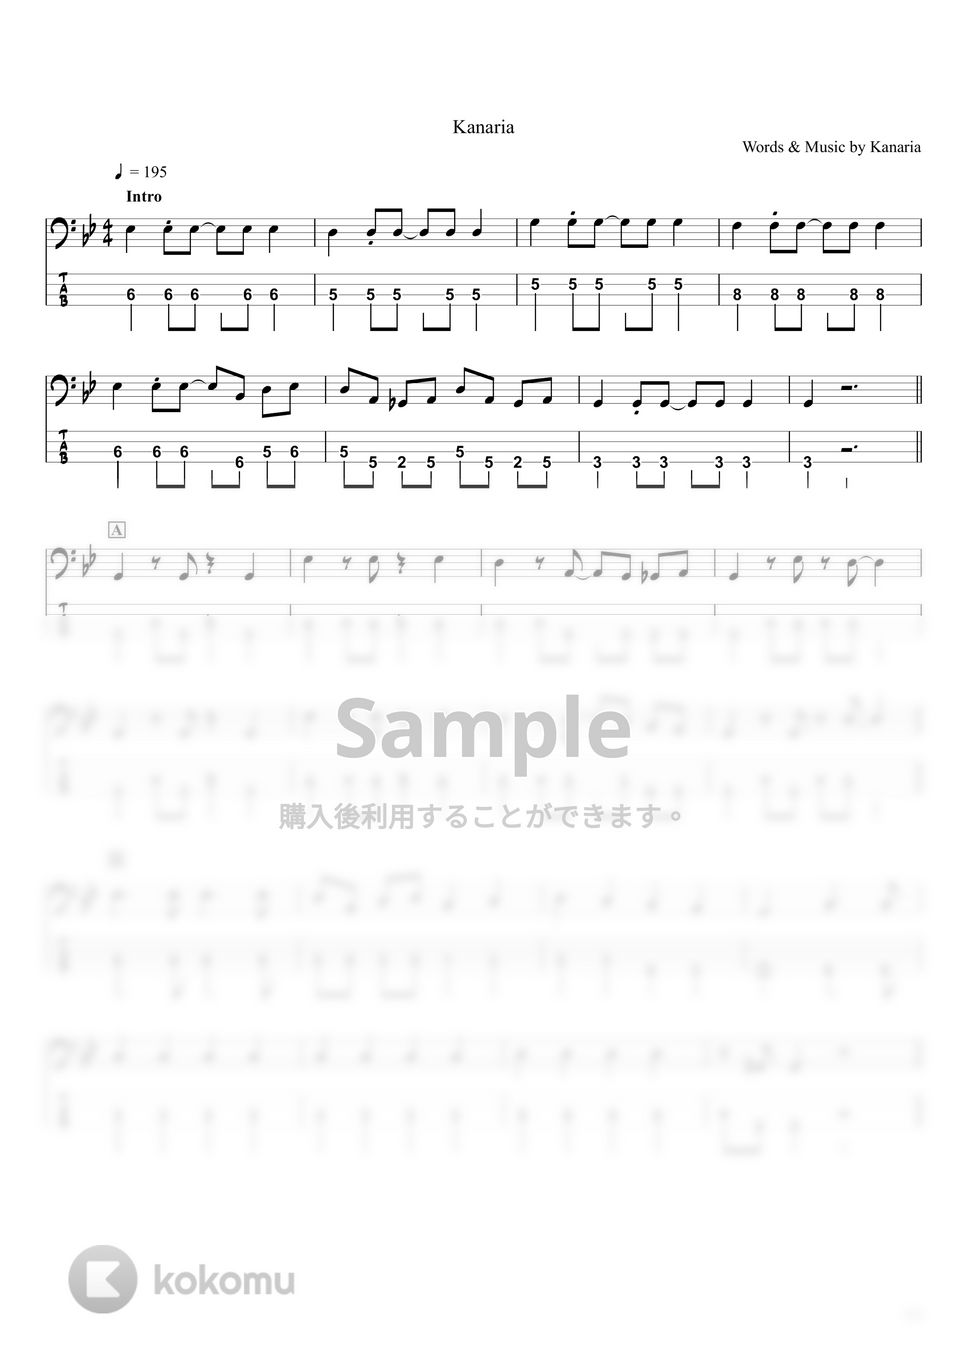 Kanaria - アイデンティティ (ベースTAB譜☆4弦ベース対応) by swbass